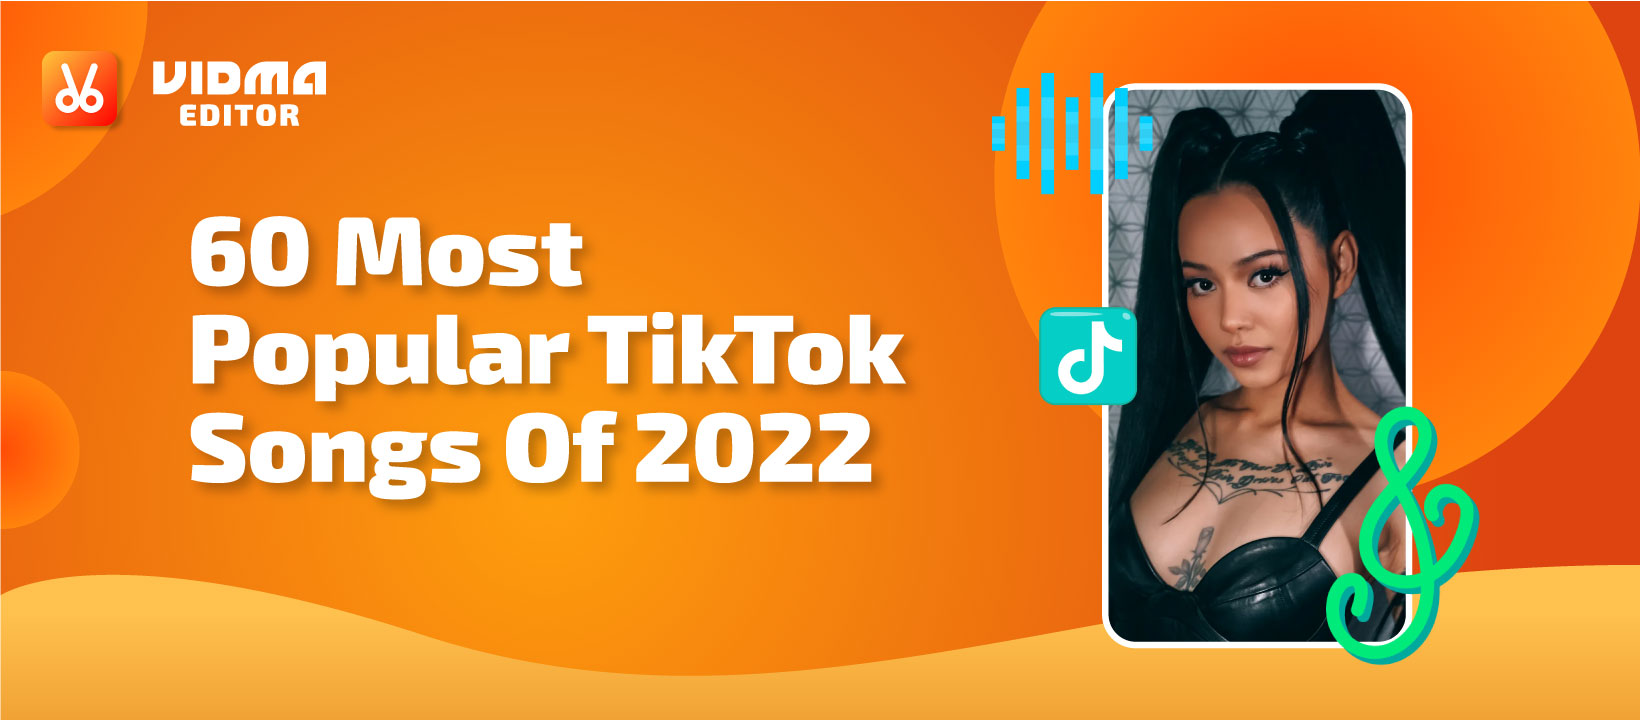 60 Most Popular TikTok Songs Of 2022